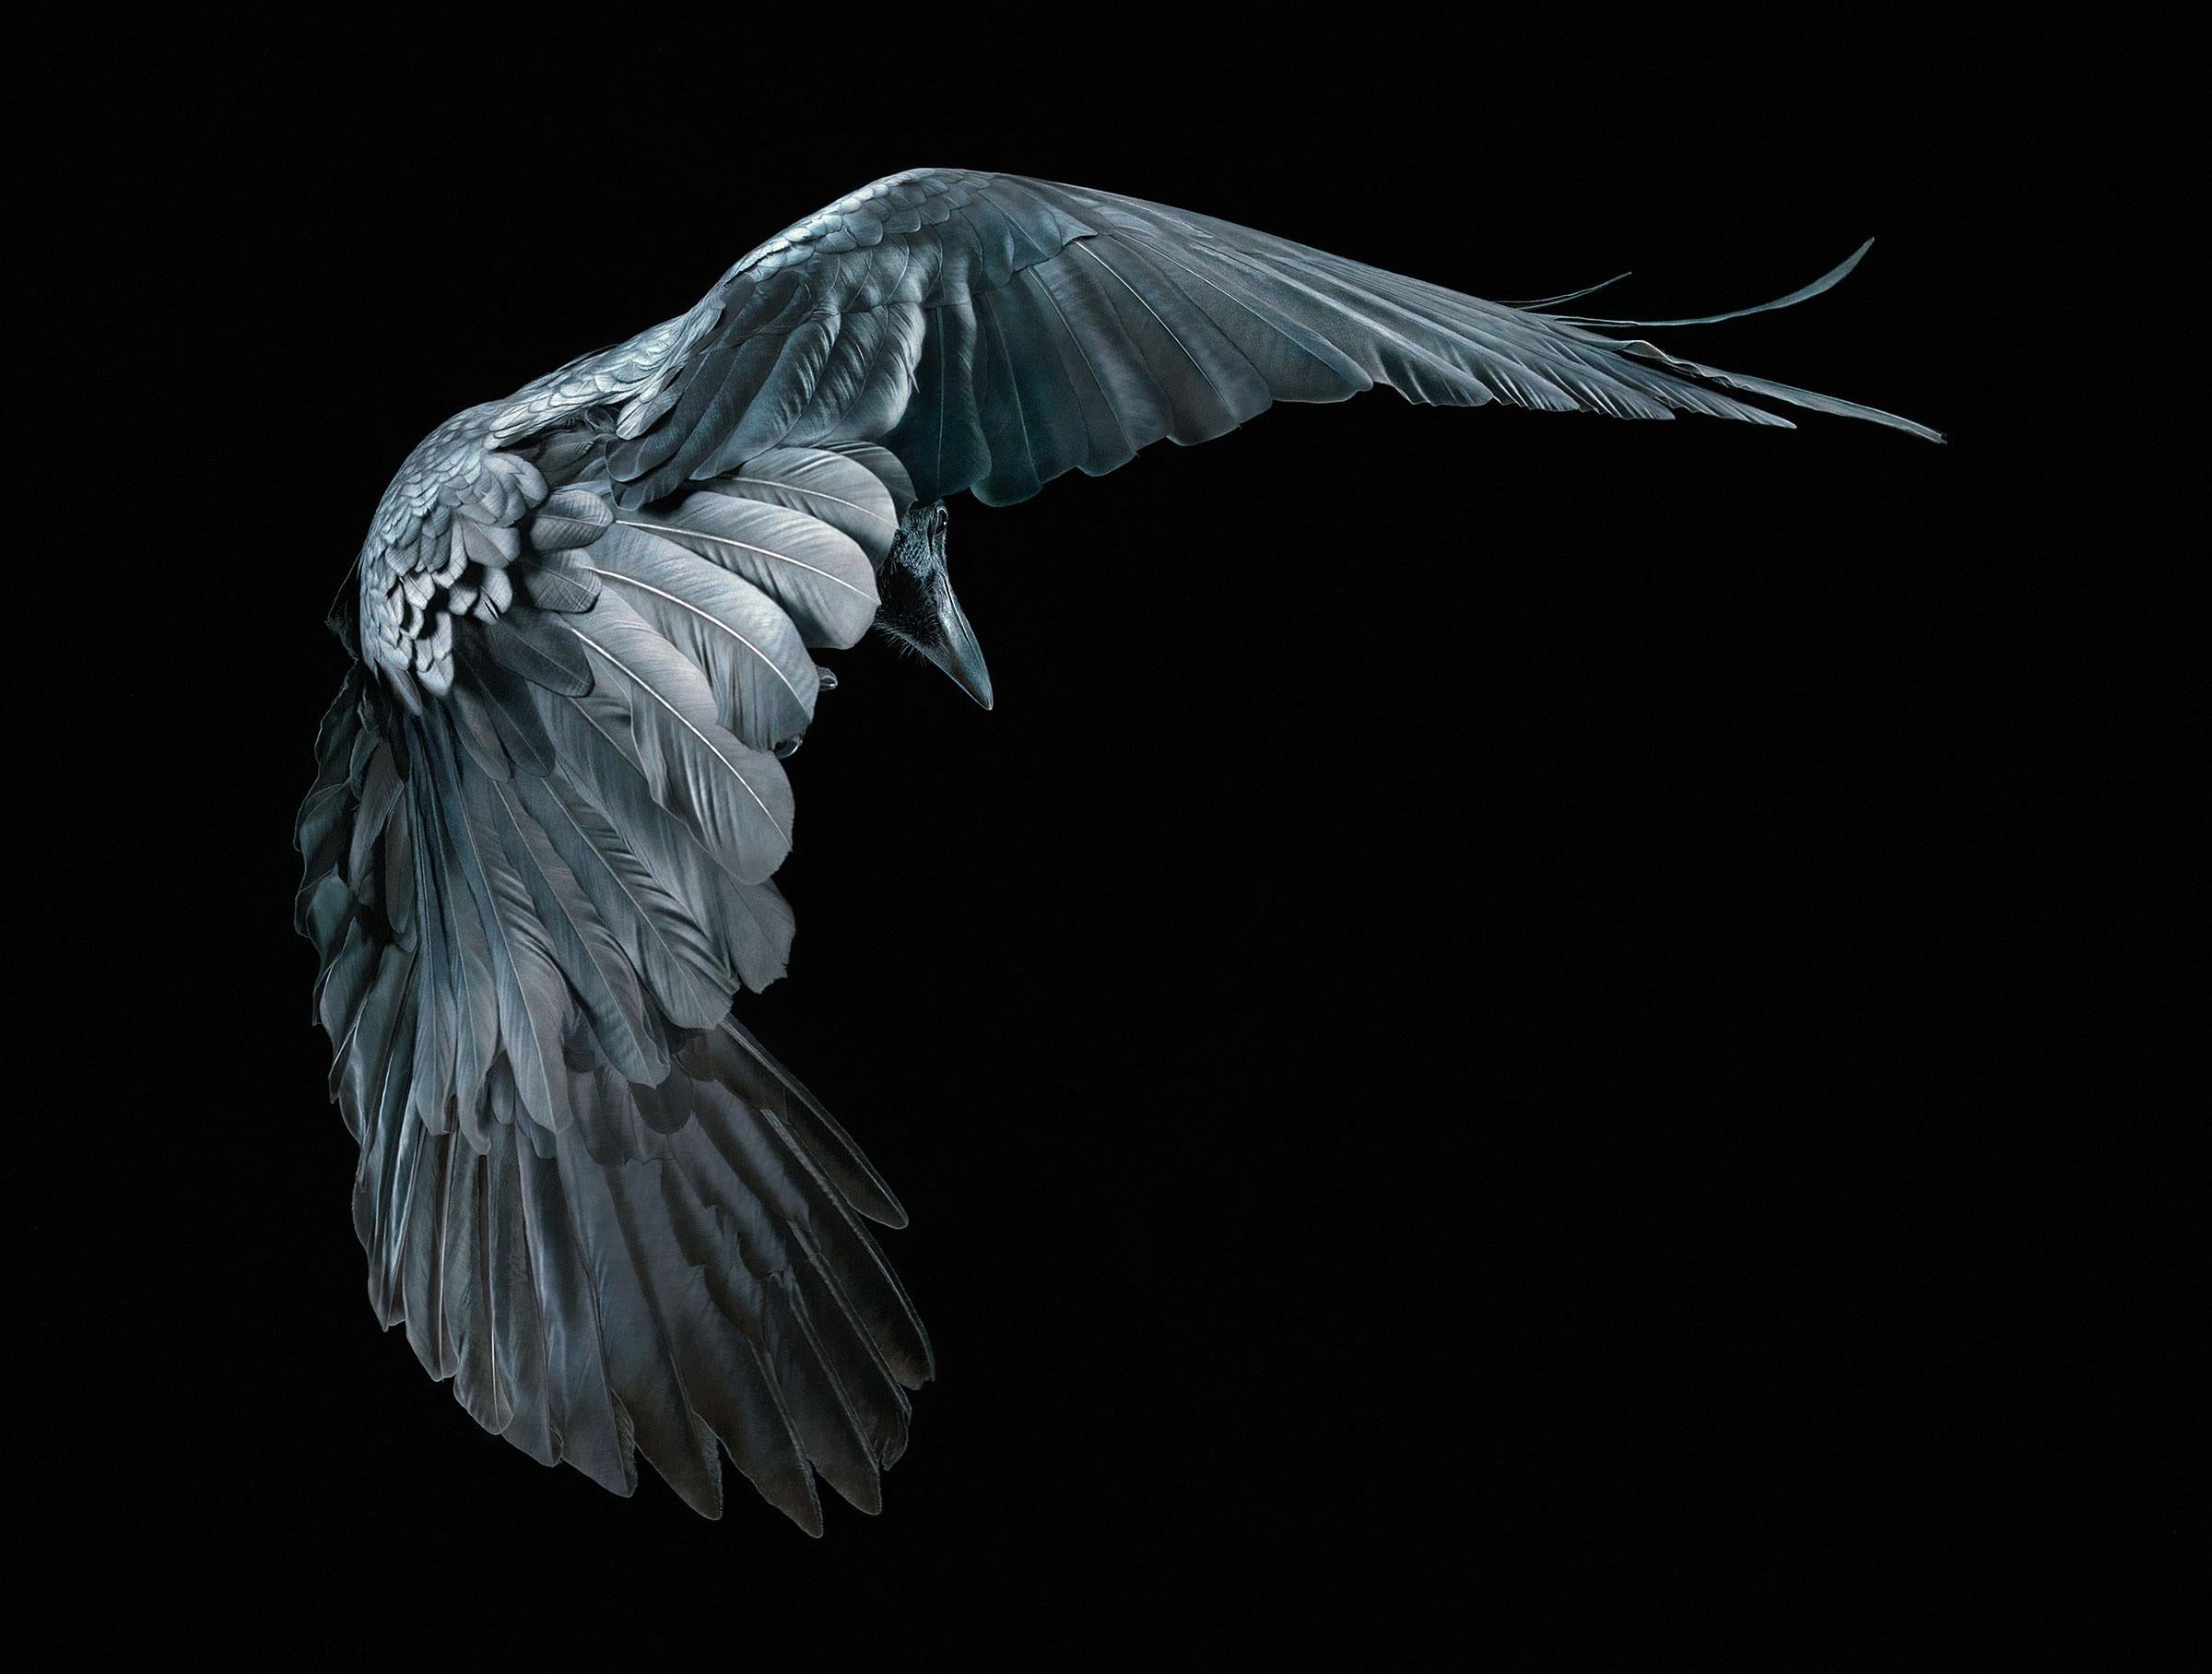 Art of Dying - Contemporary British Art, Animal Photography, Bats, Tim Flach